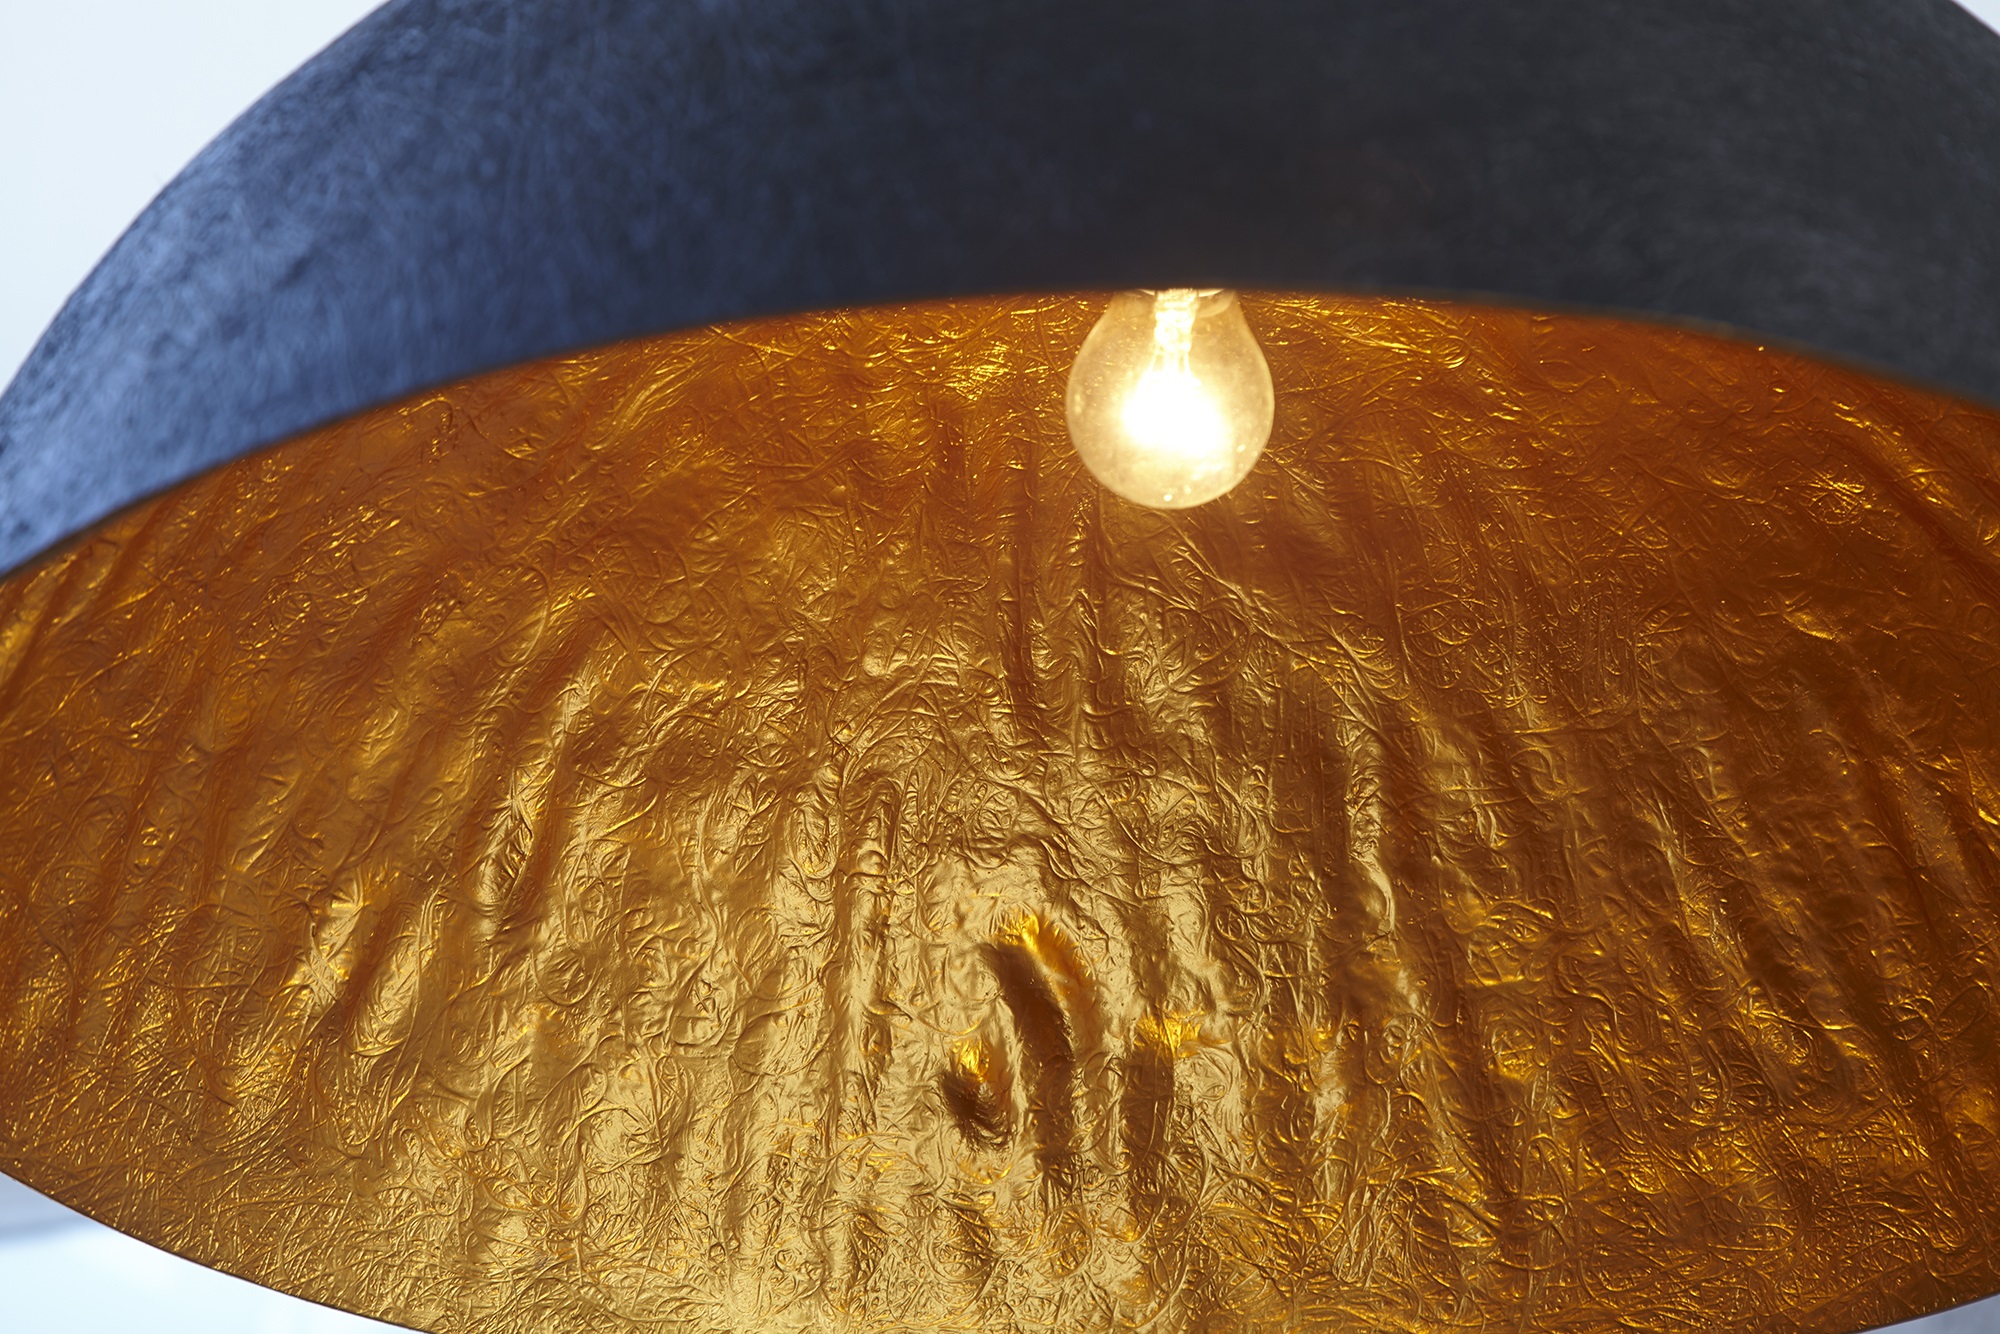 Hanglamp zwart goud 50 cm